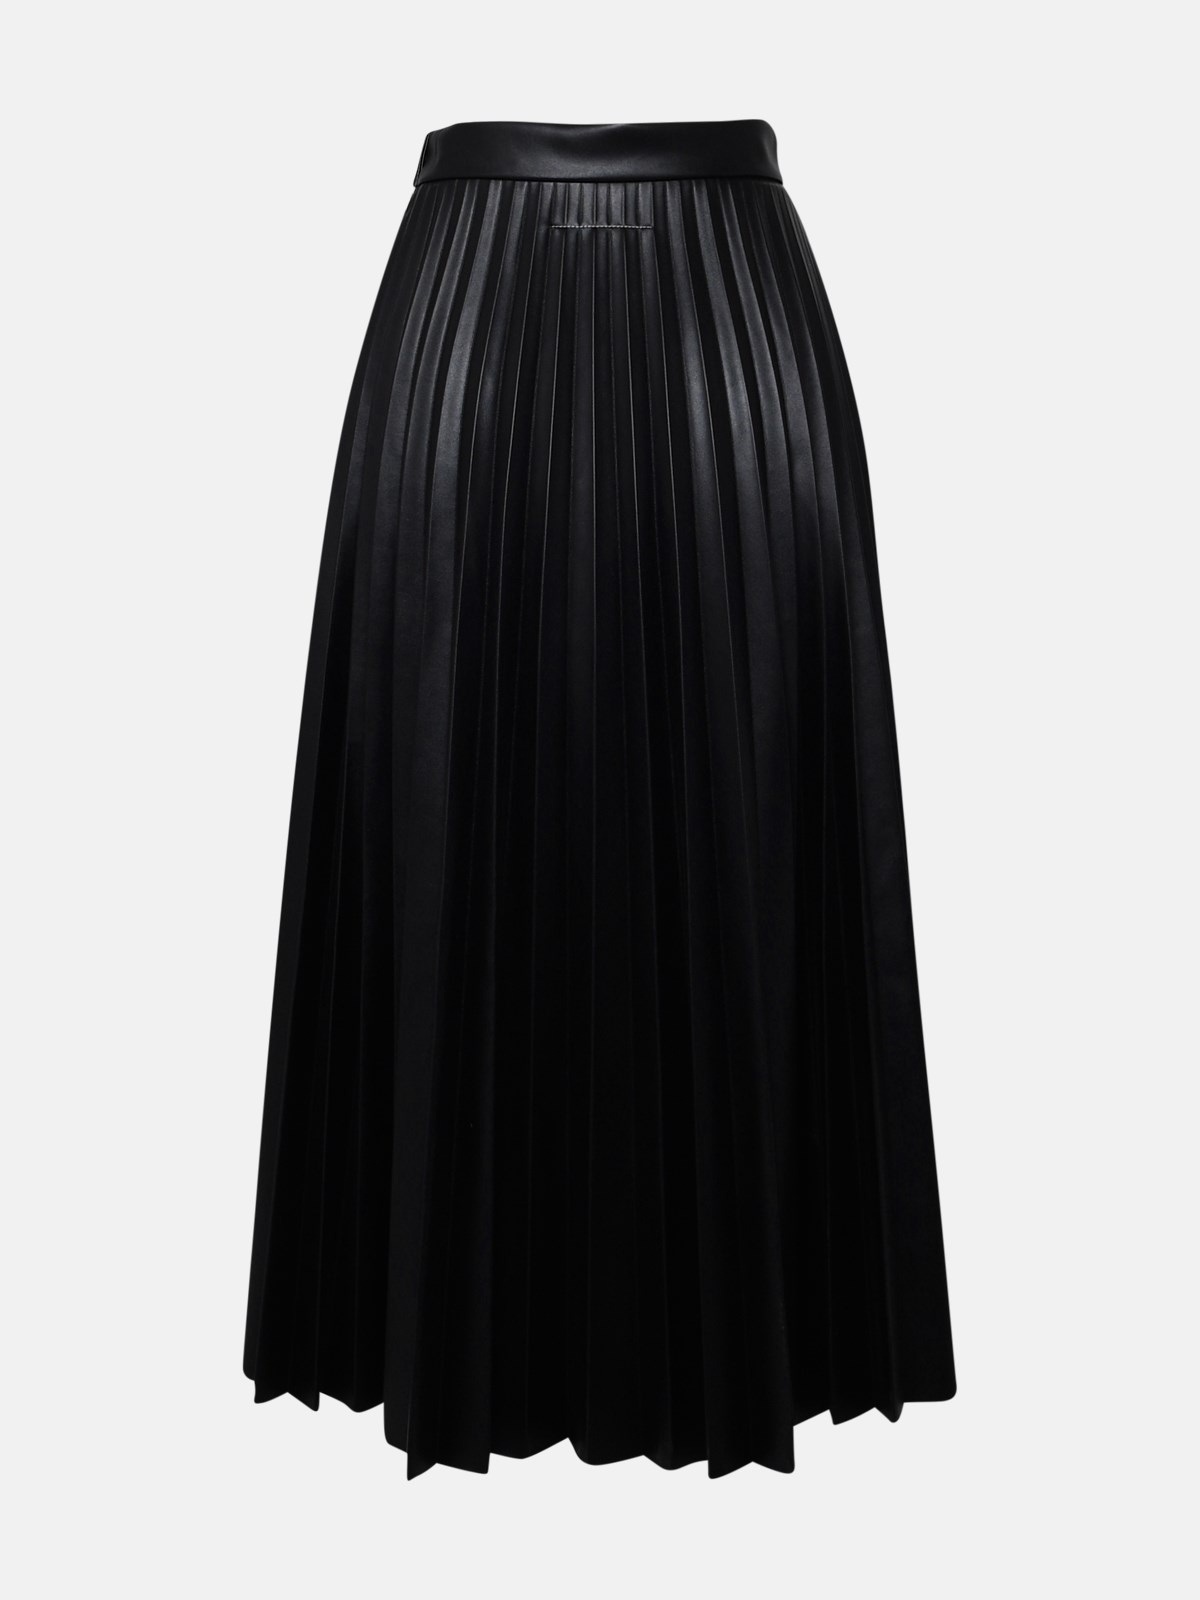 Black leather skirt - 3